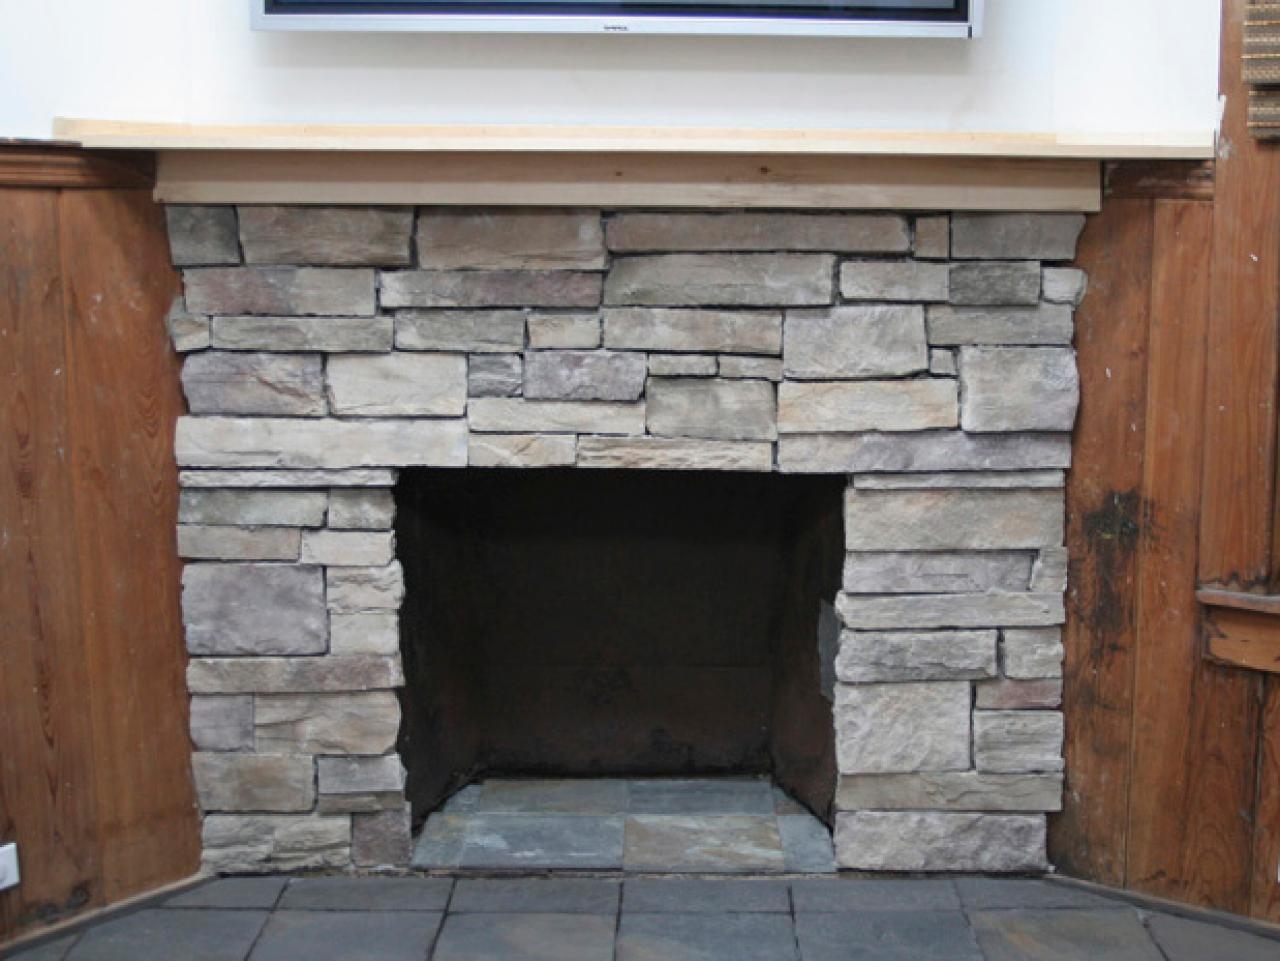 brick fireplace cover up ideas brick fireplace cover up ideas inspirational how to cover a brick fireplace with stone